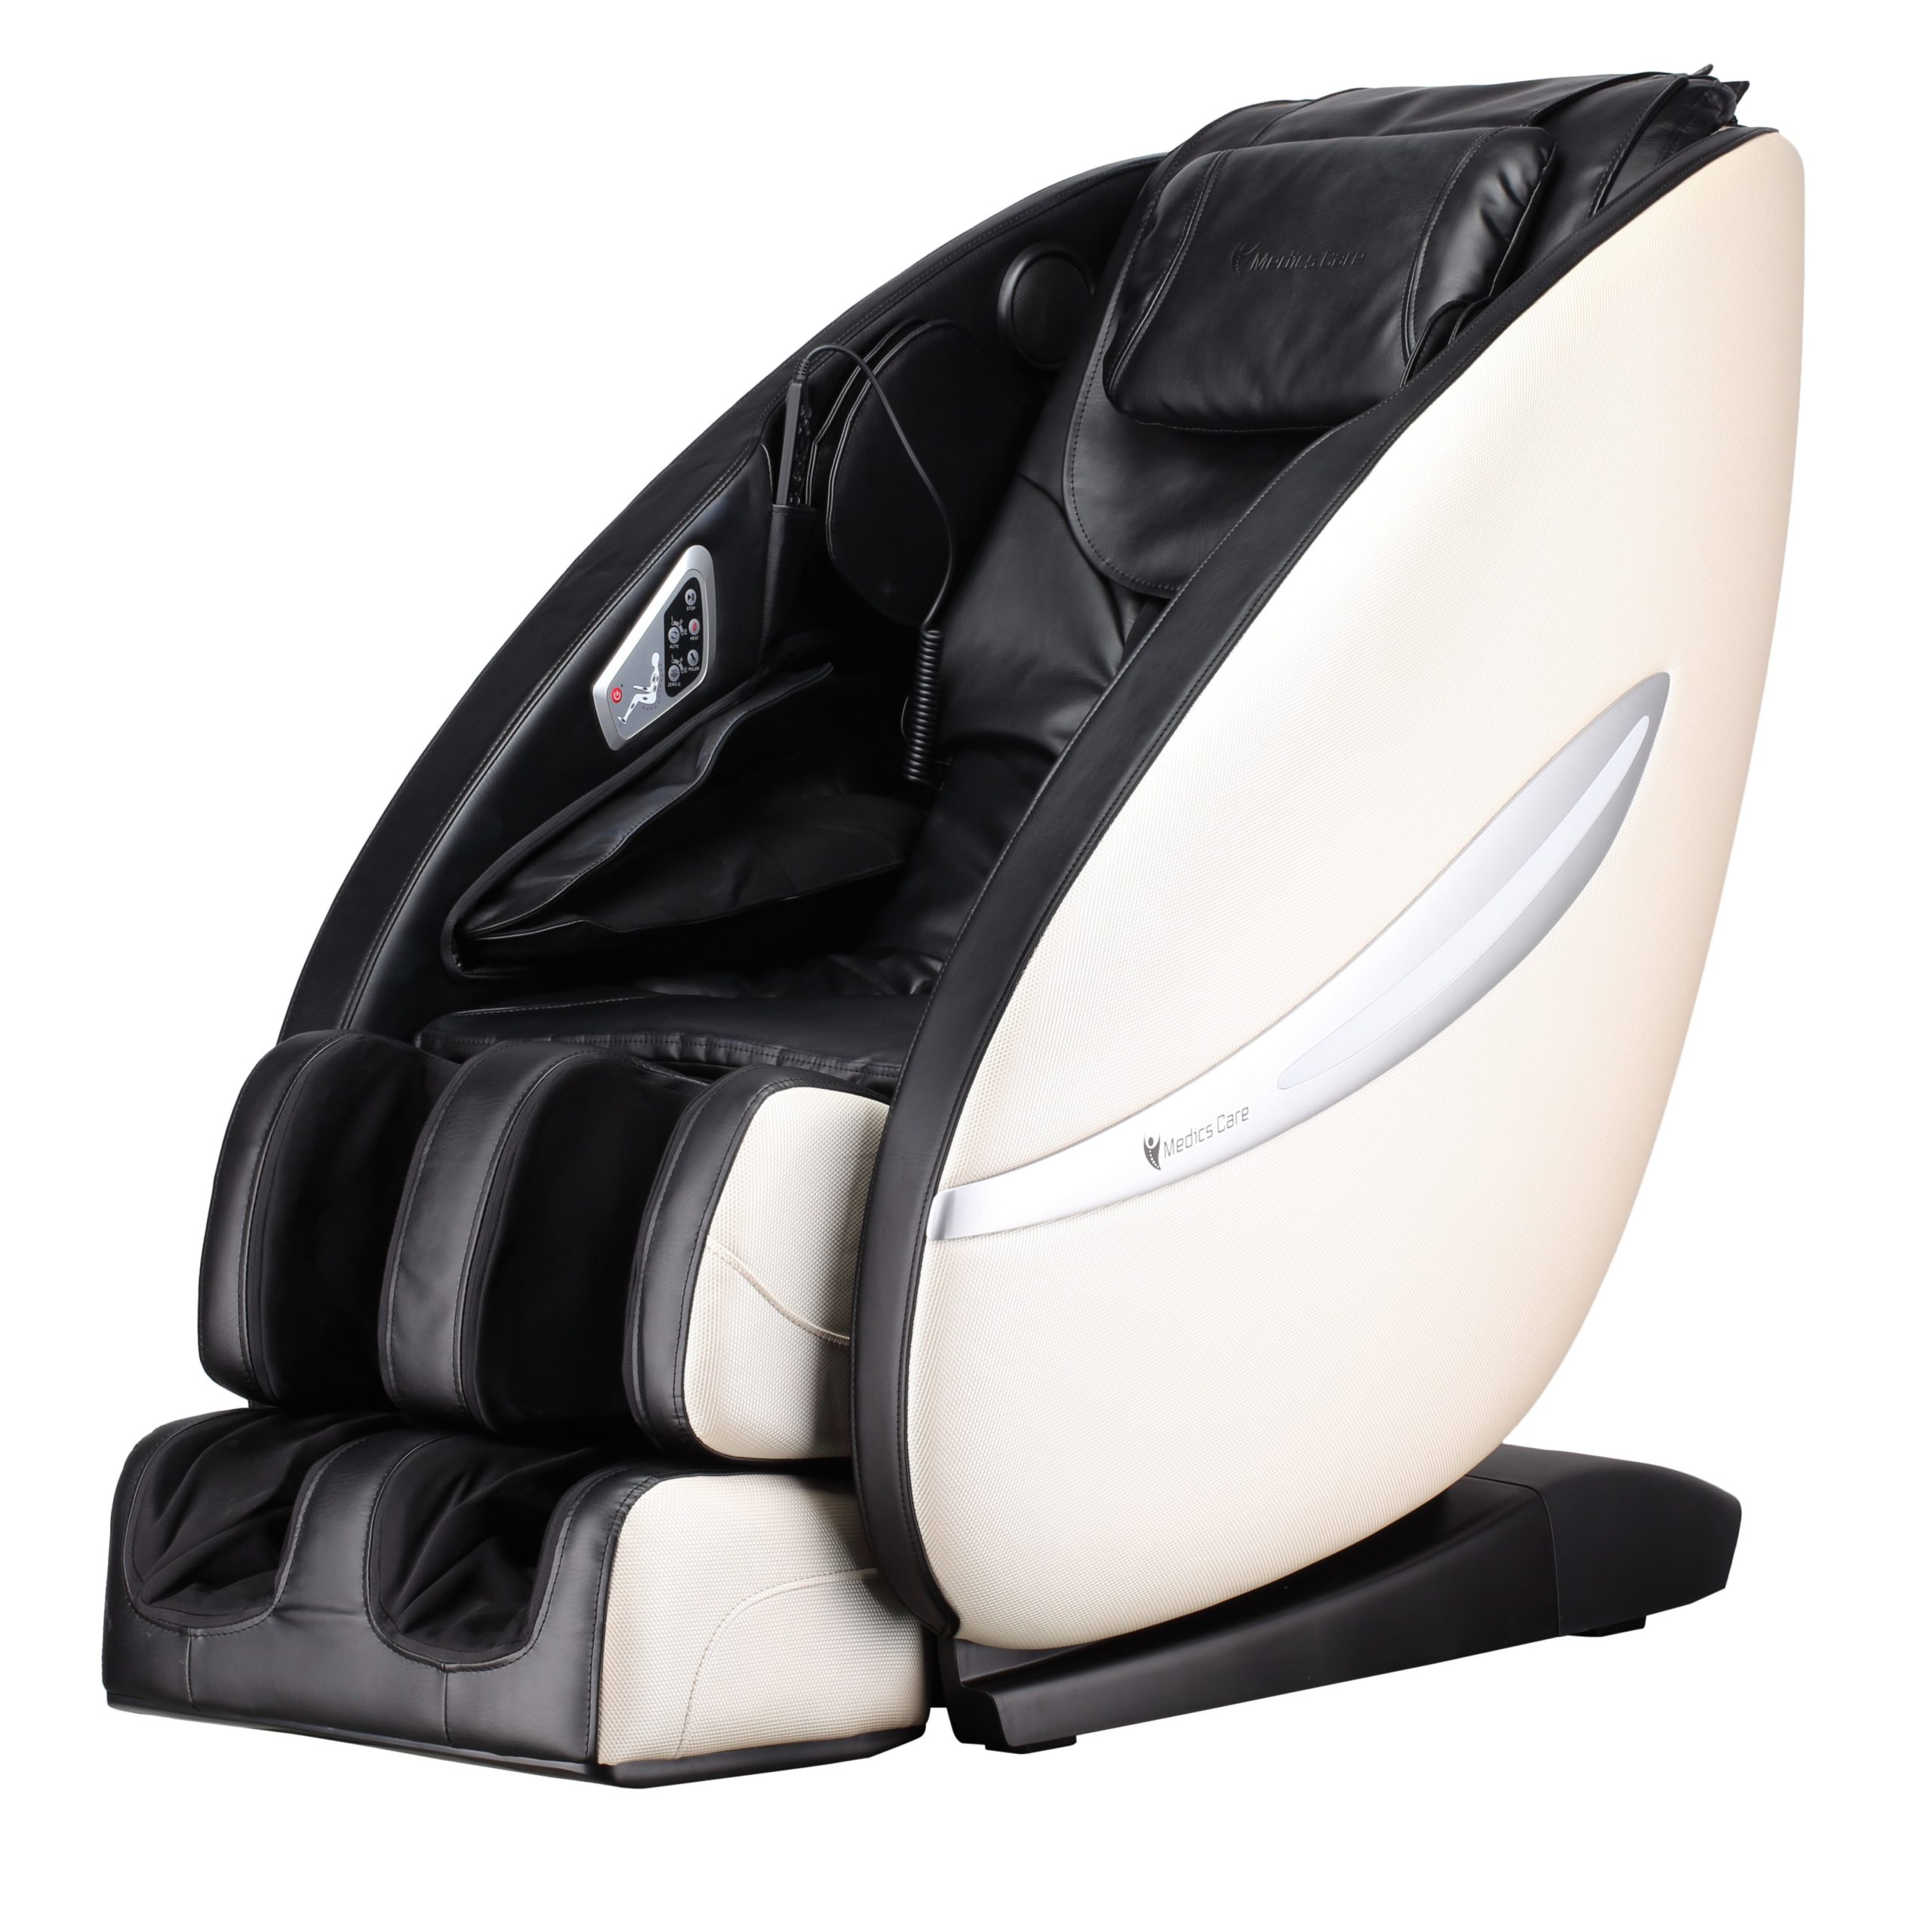 Image 1 - SMART KINGDOM CARE Massage Chair